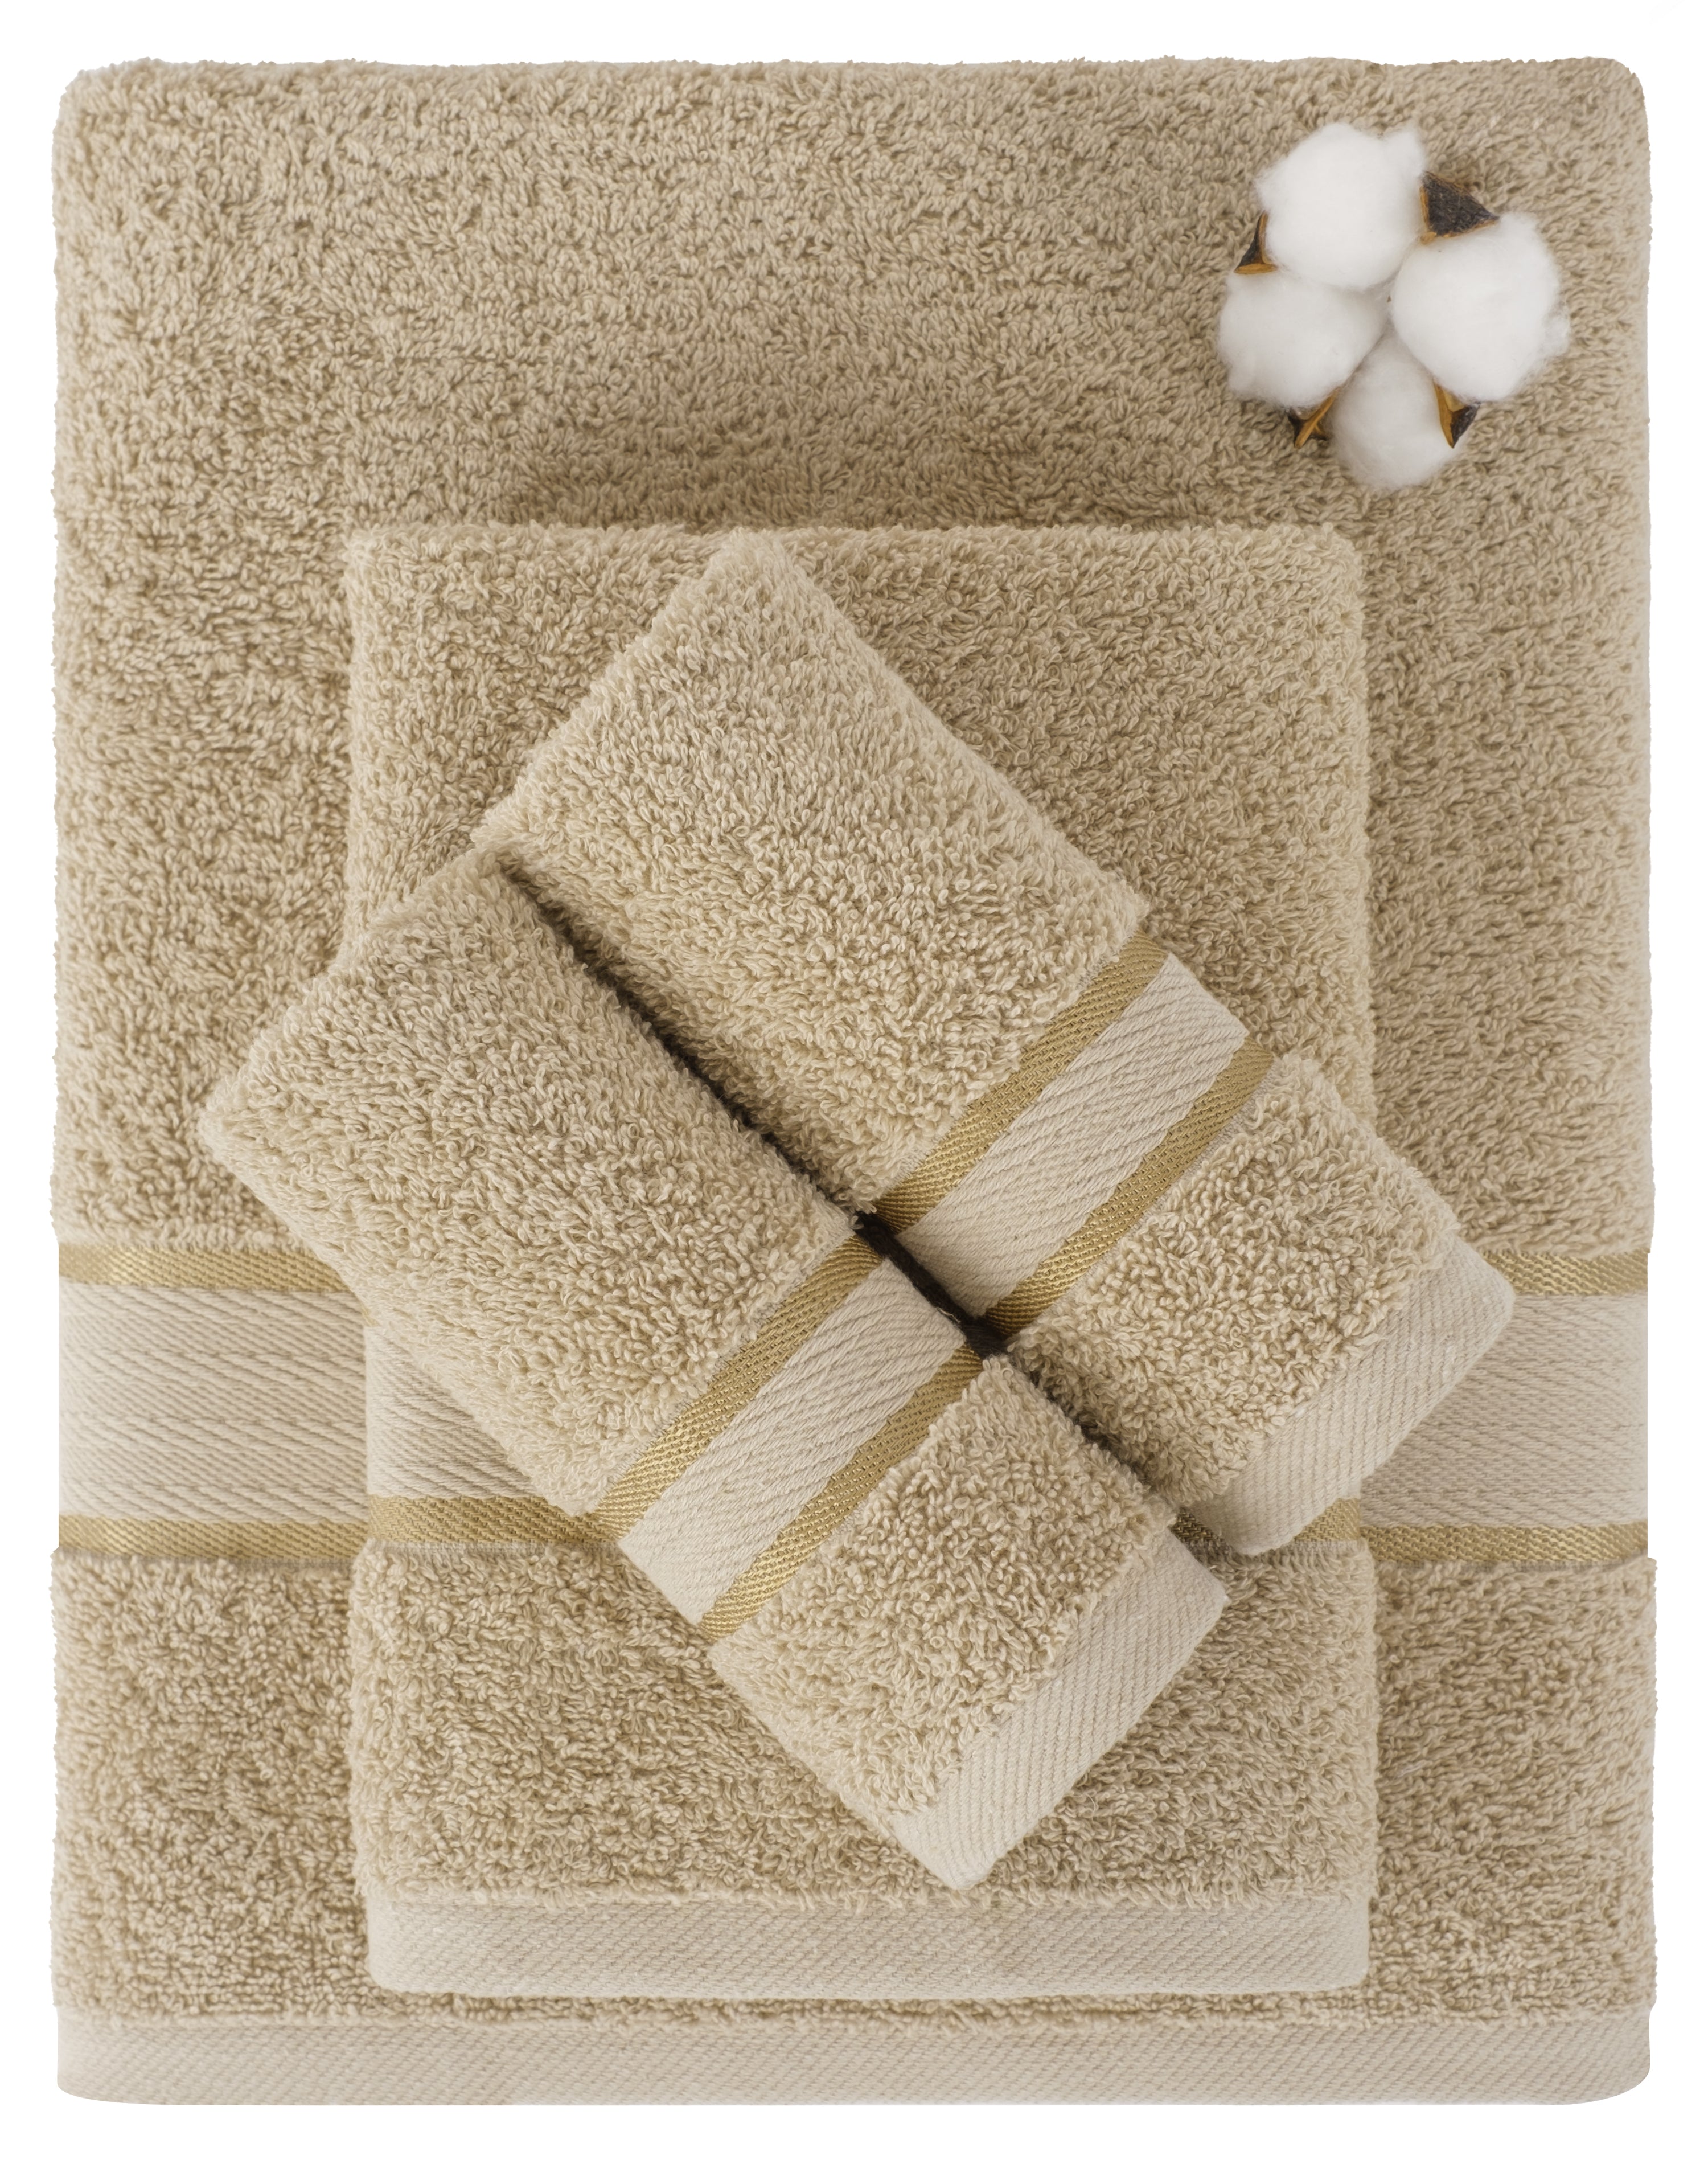 American Soft Linen - Salem 6 Piece Turkish Cotton Luxury Towel Set - Sand-Taupe - 4